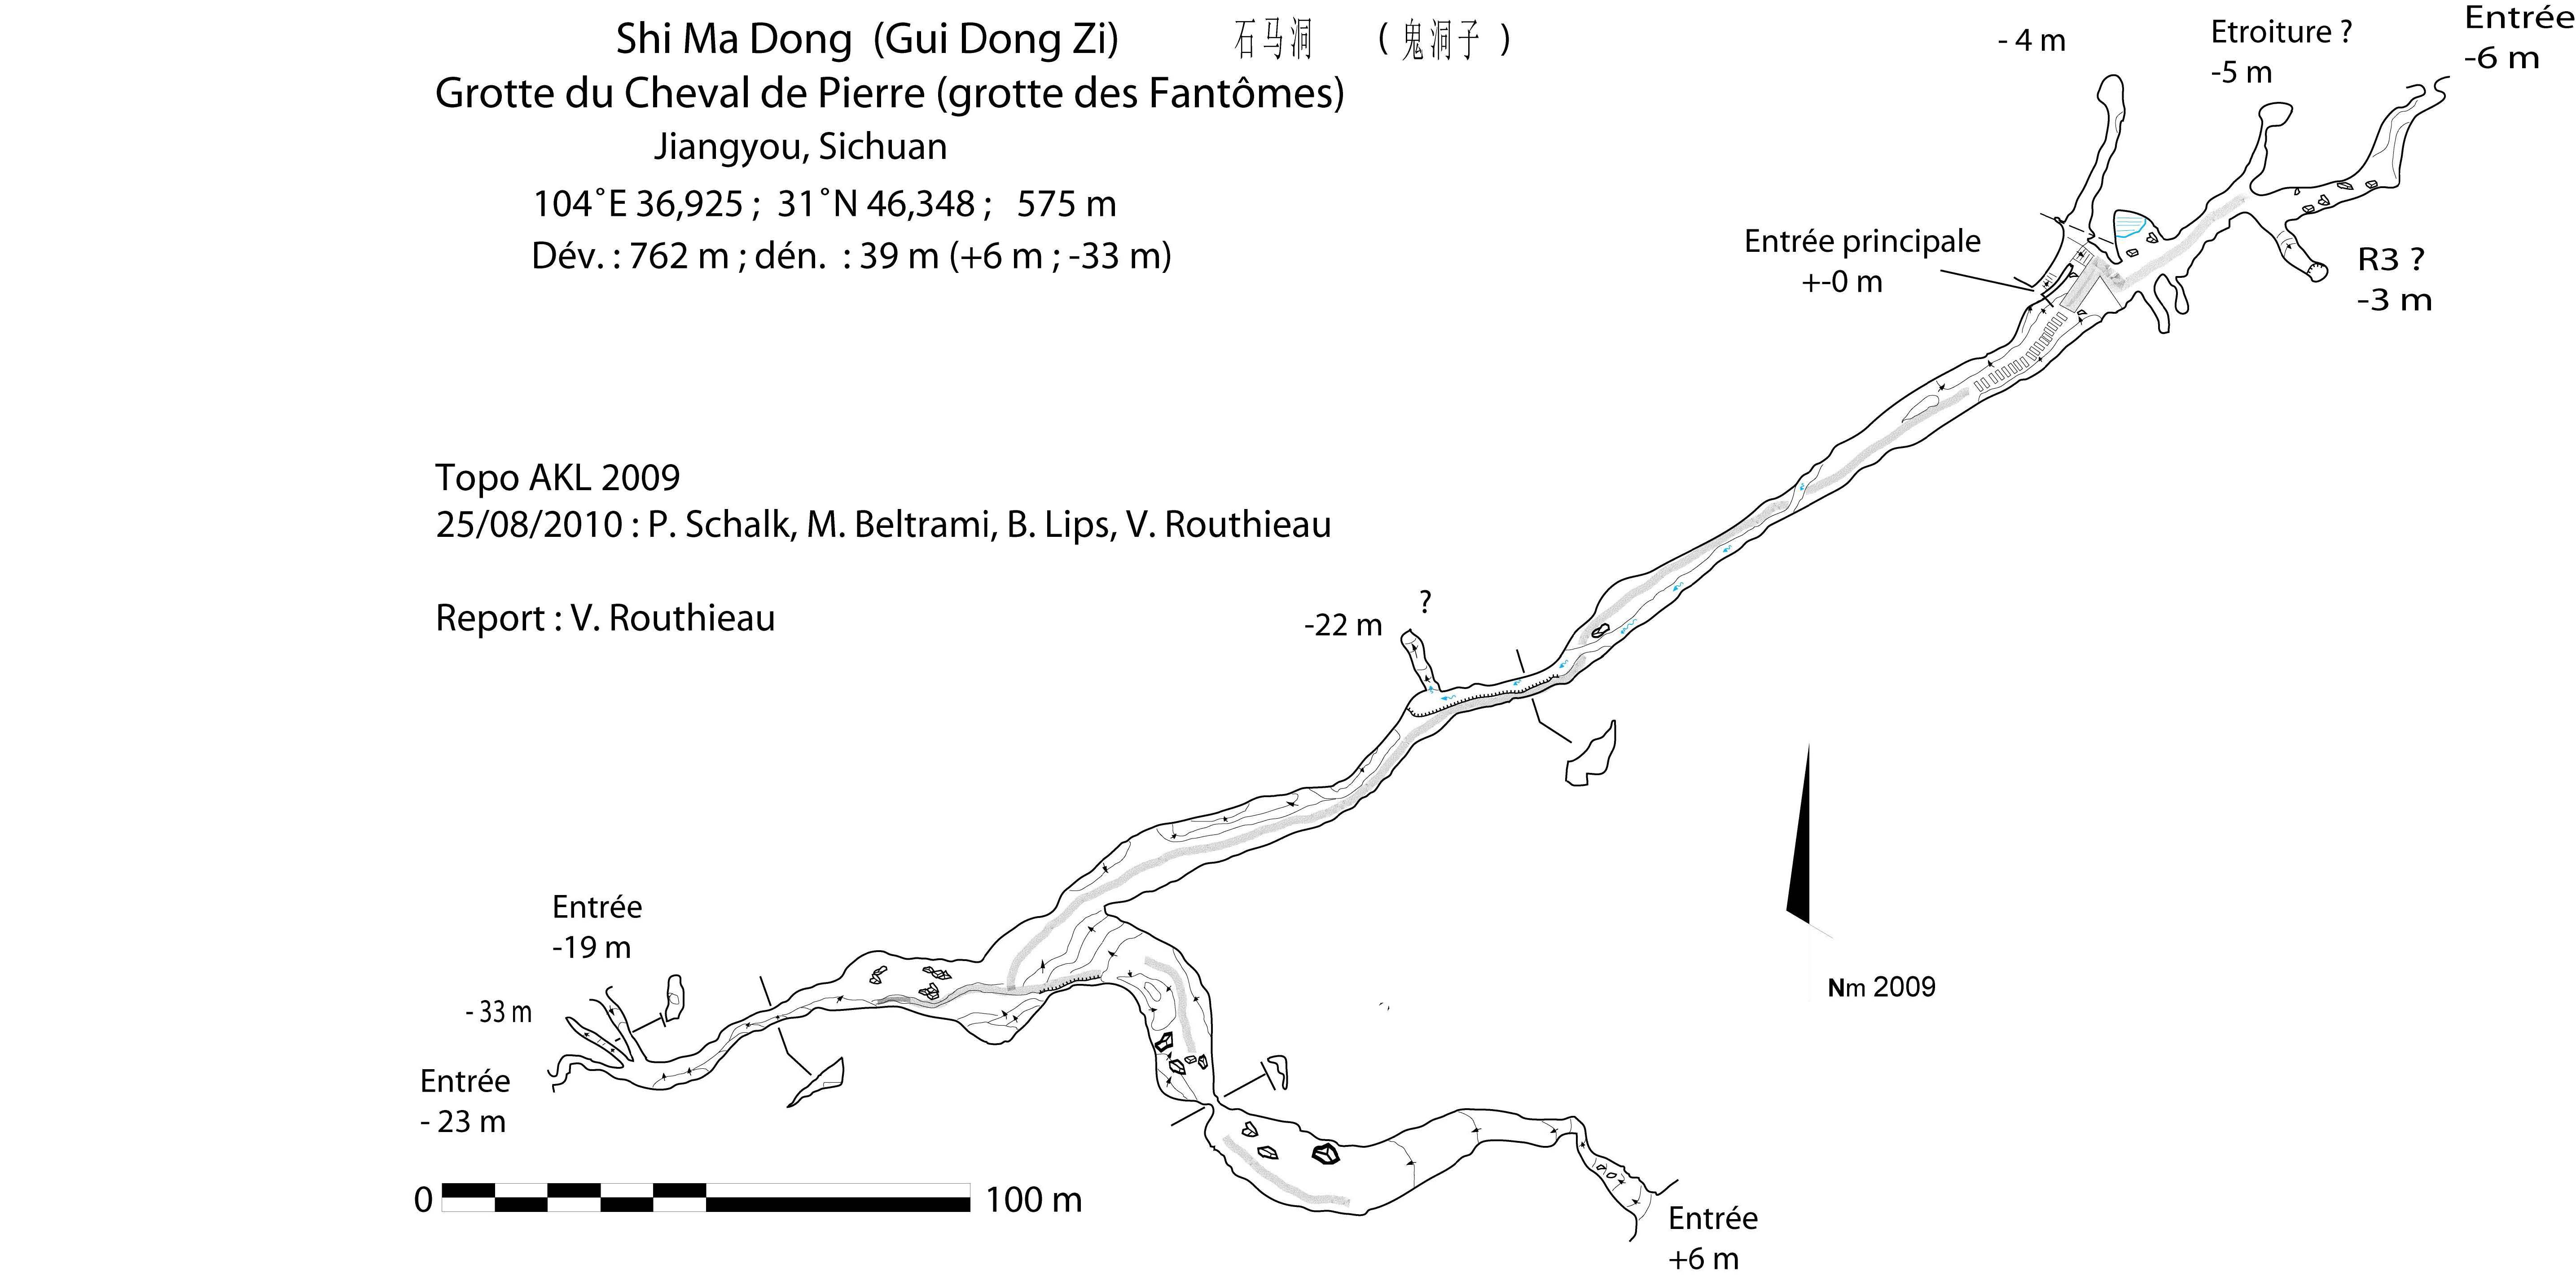 topographie Shimadong 石马洞